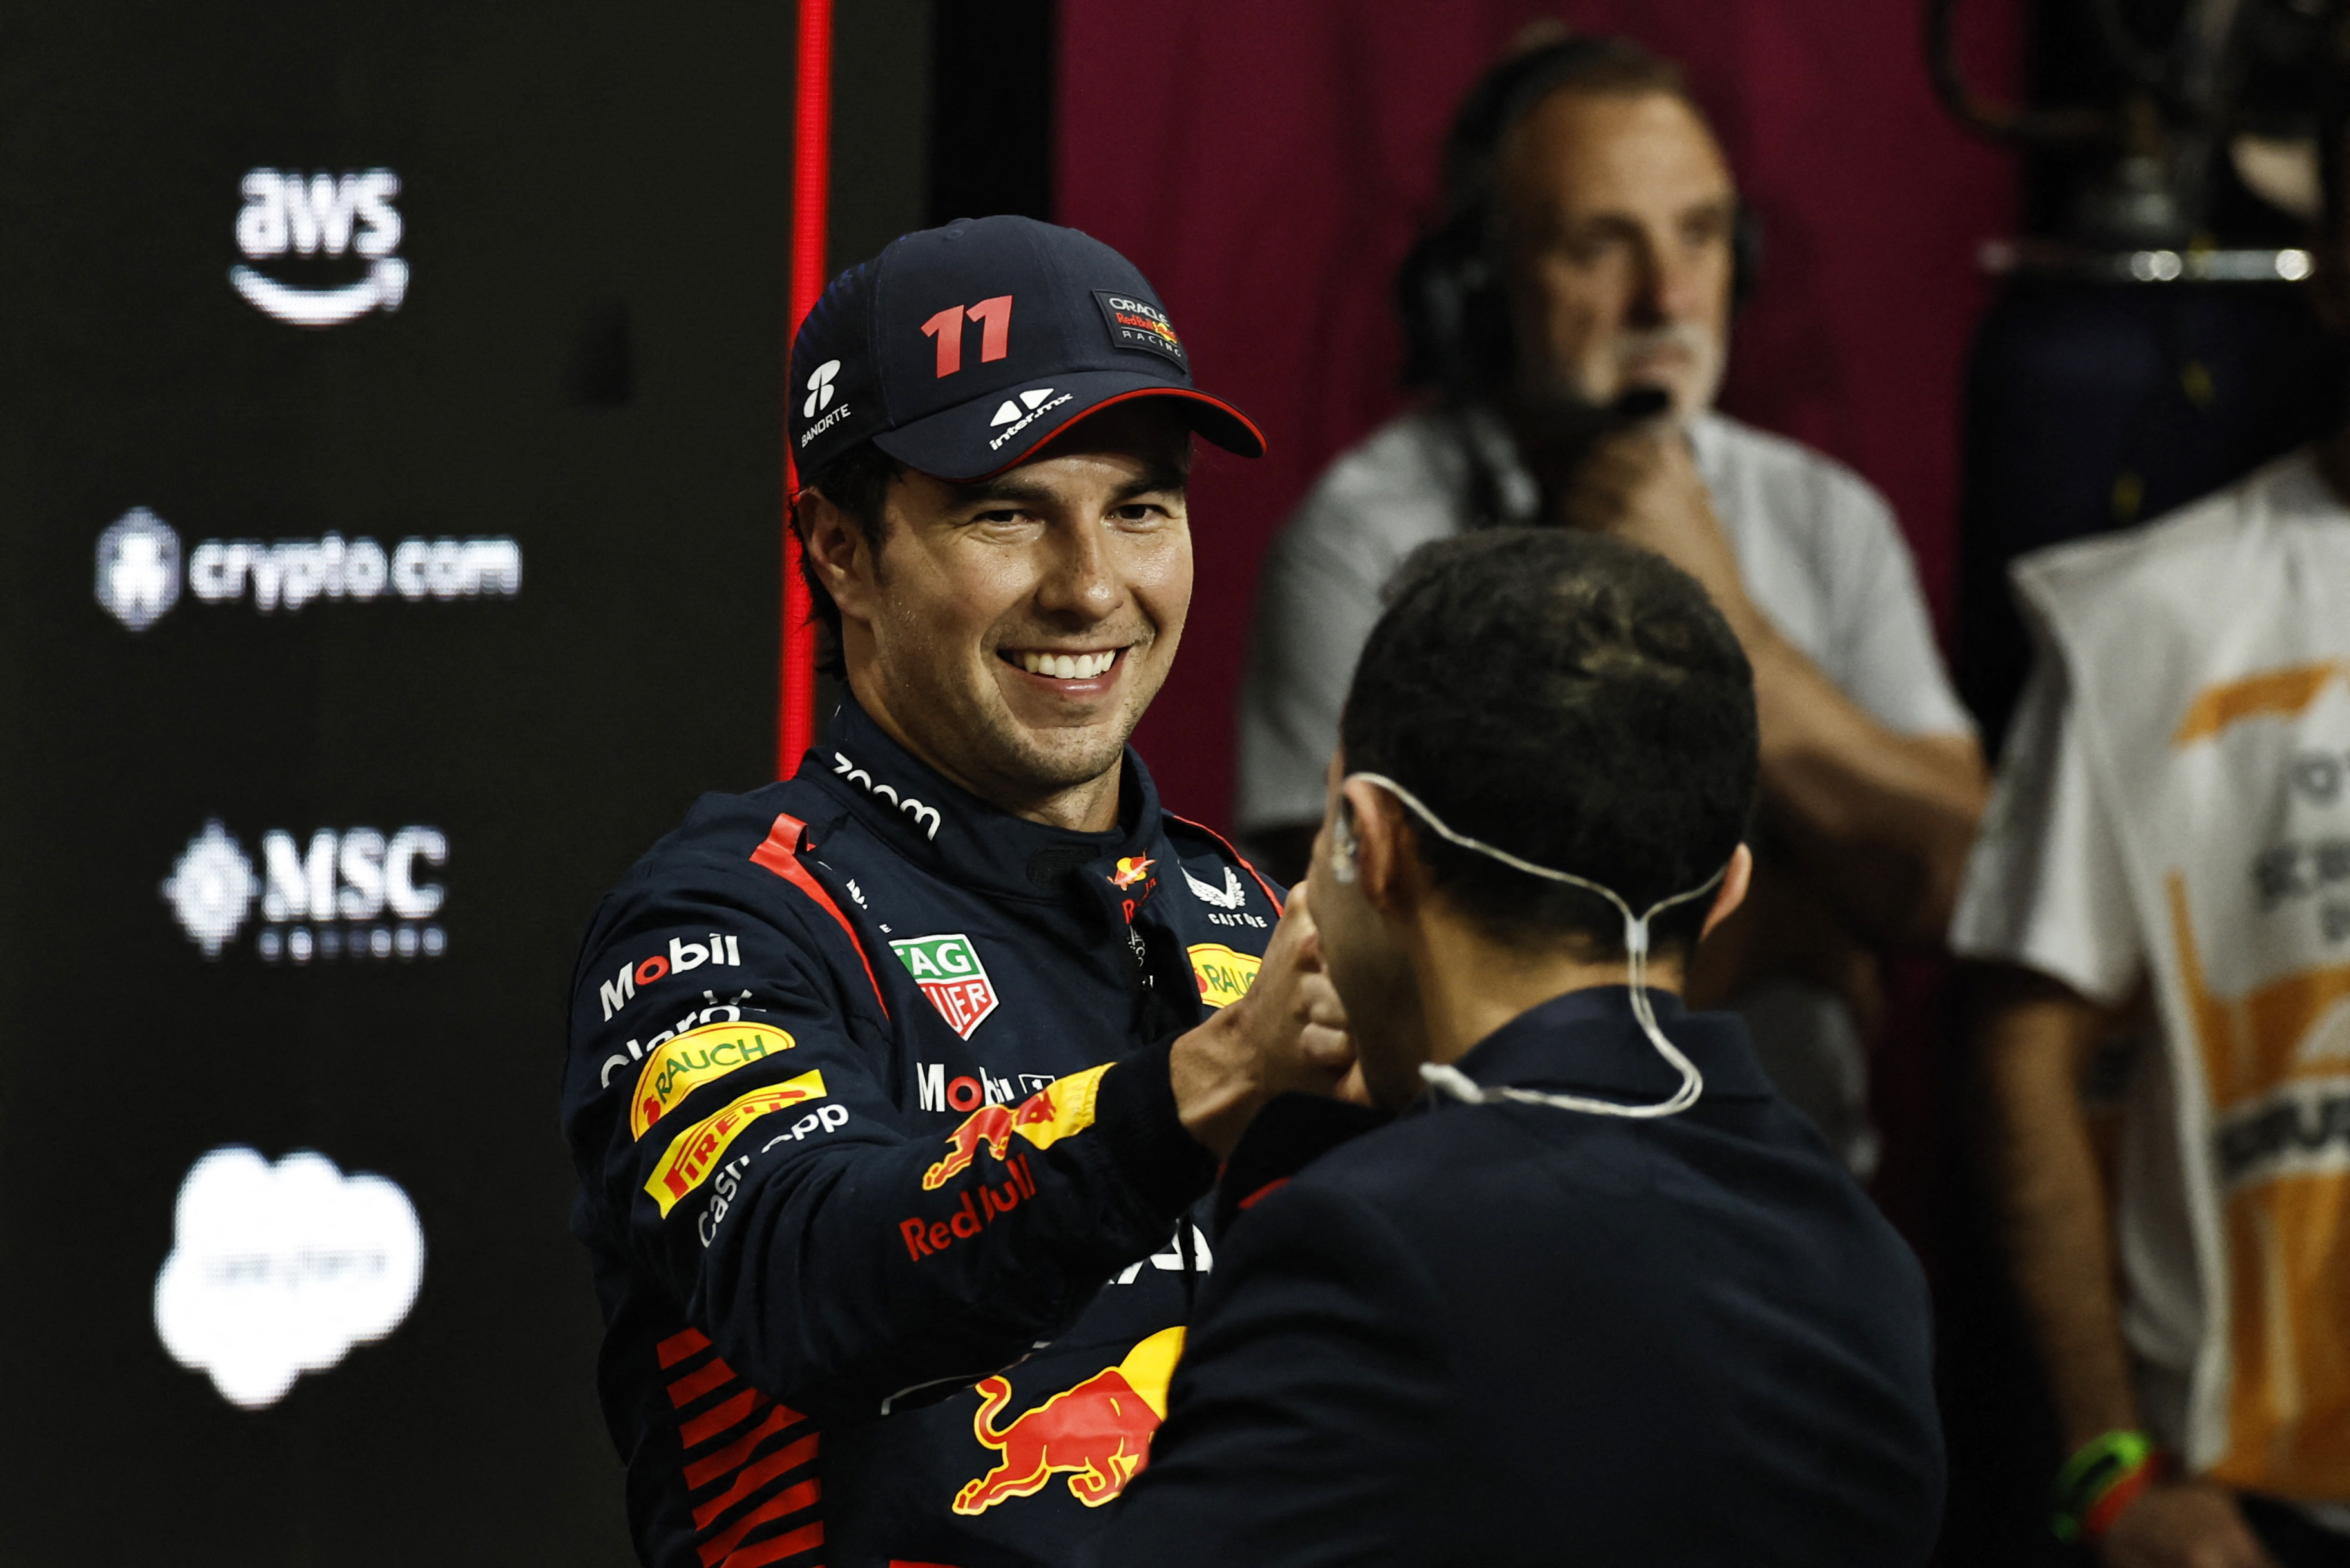 Perez on pole in Saudi Arabia as Verstappen hits trouble | Reuters